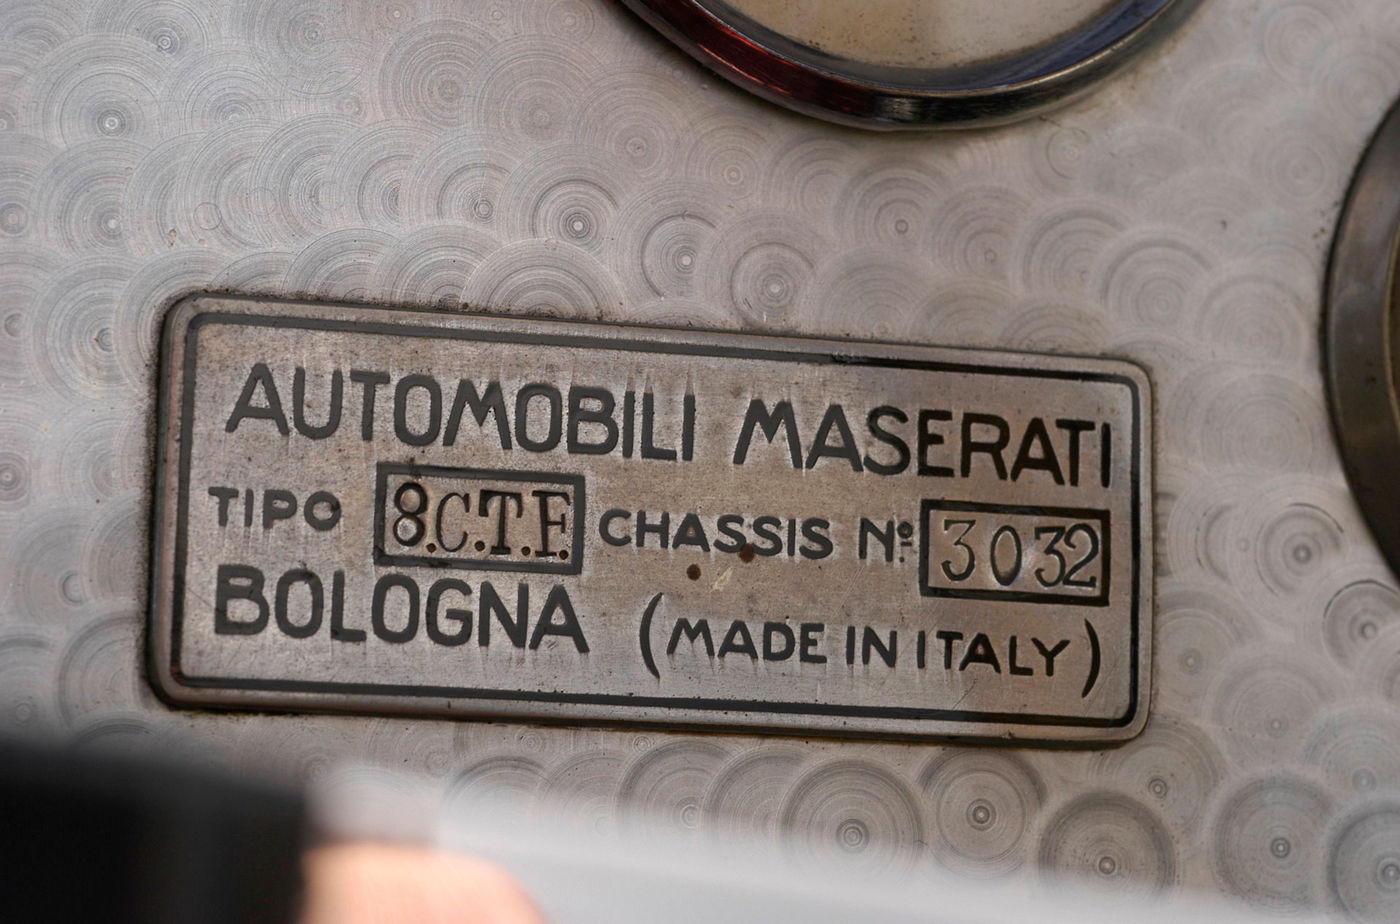 Targa "AUTOMOBILI Maserati TIPO 8CTF CHASSIS N.3032 BOLOGNA (MADE IN ITALY)"